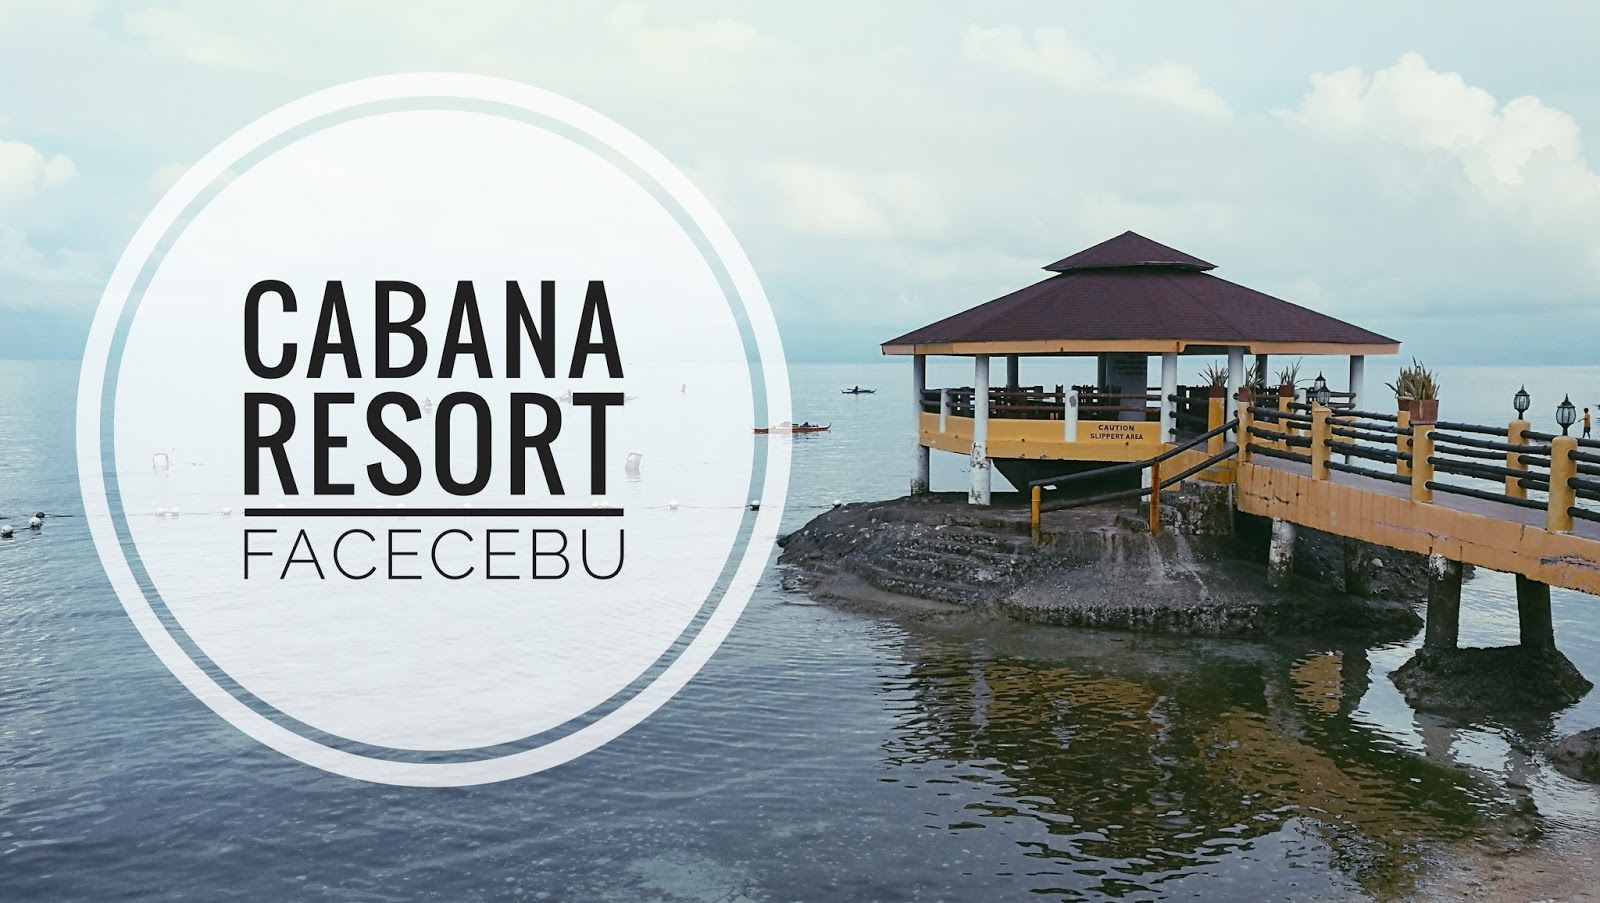 Cabana Moalboal Cebu, A True Shelter For All Races - Cebu Trending